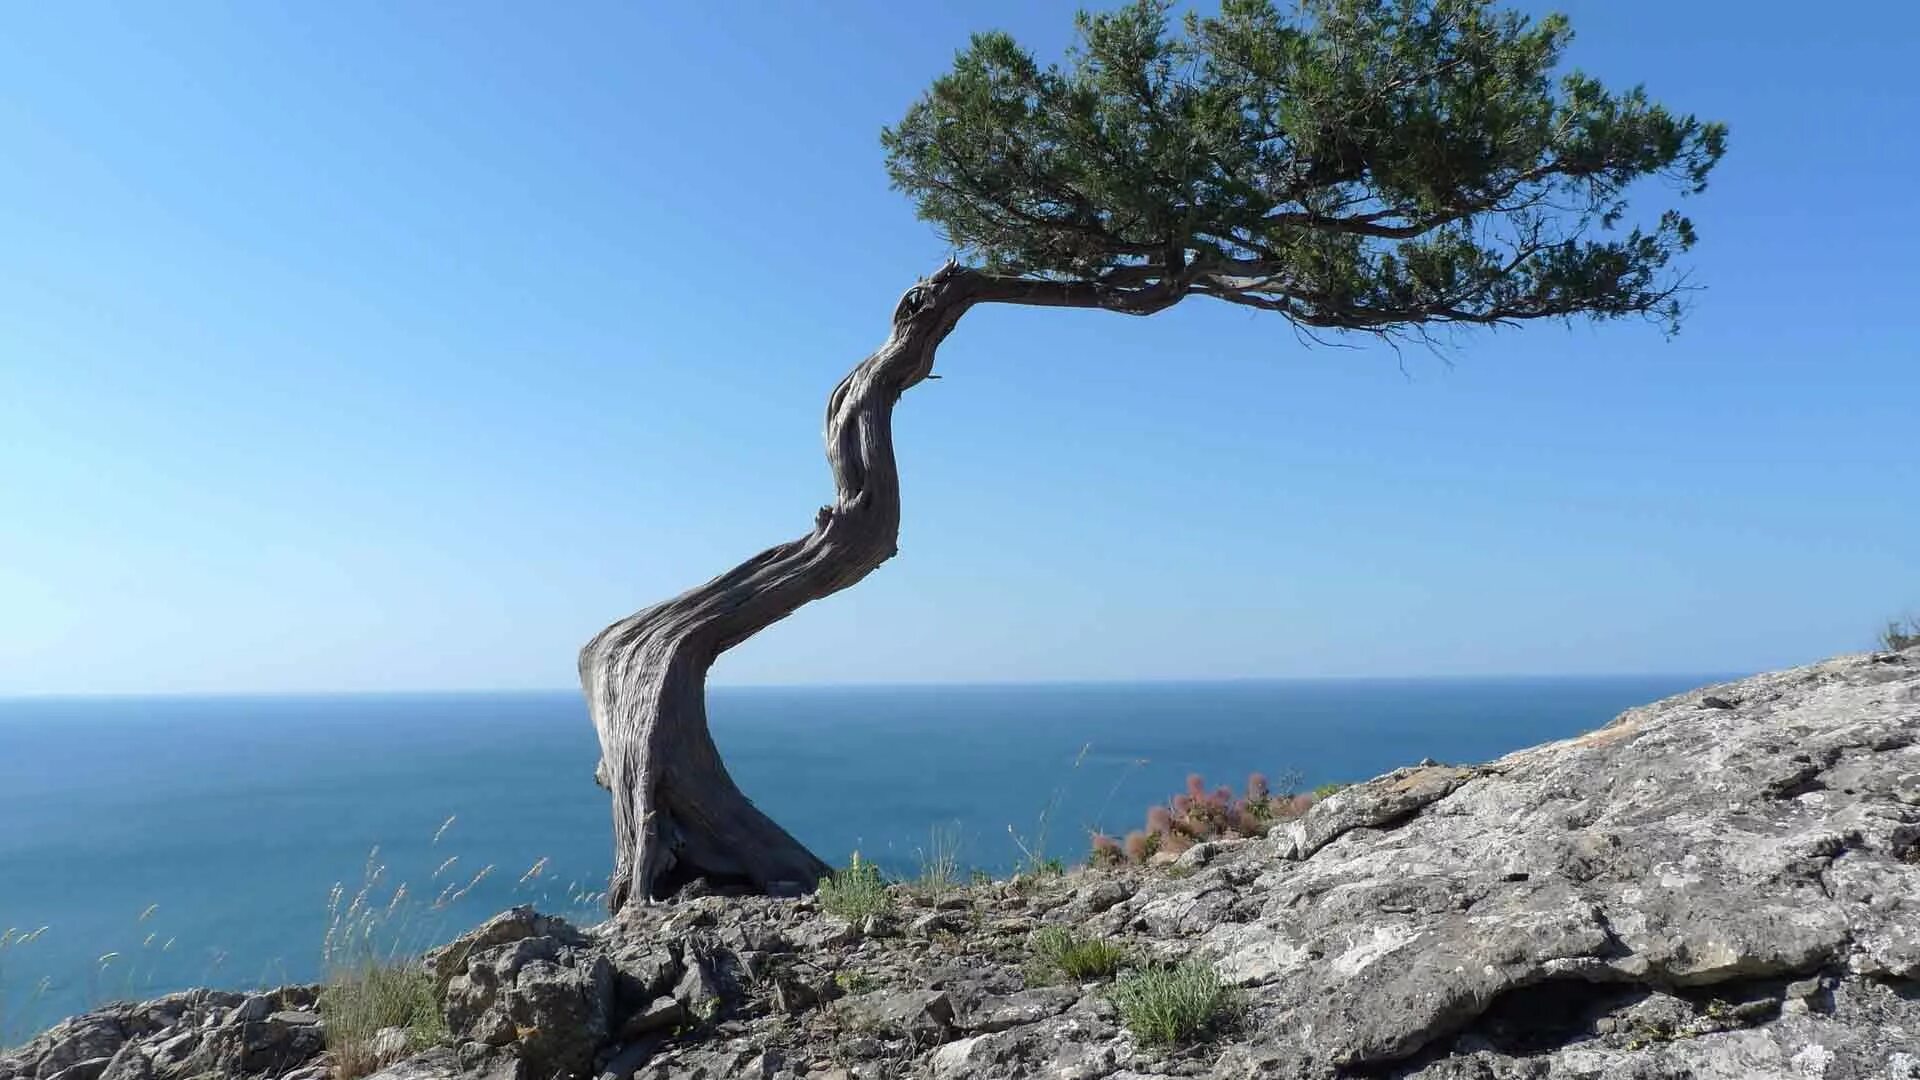 Прасковеевка Кривое дерево. Кривое дерево. Дерево на скале. Сосна на скале. Чинара на скале